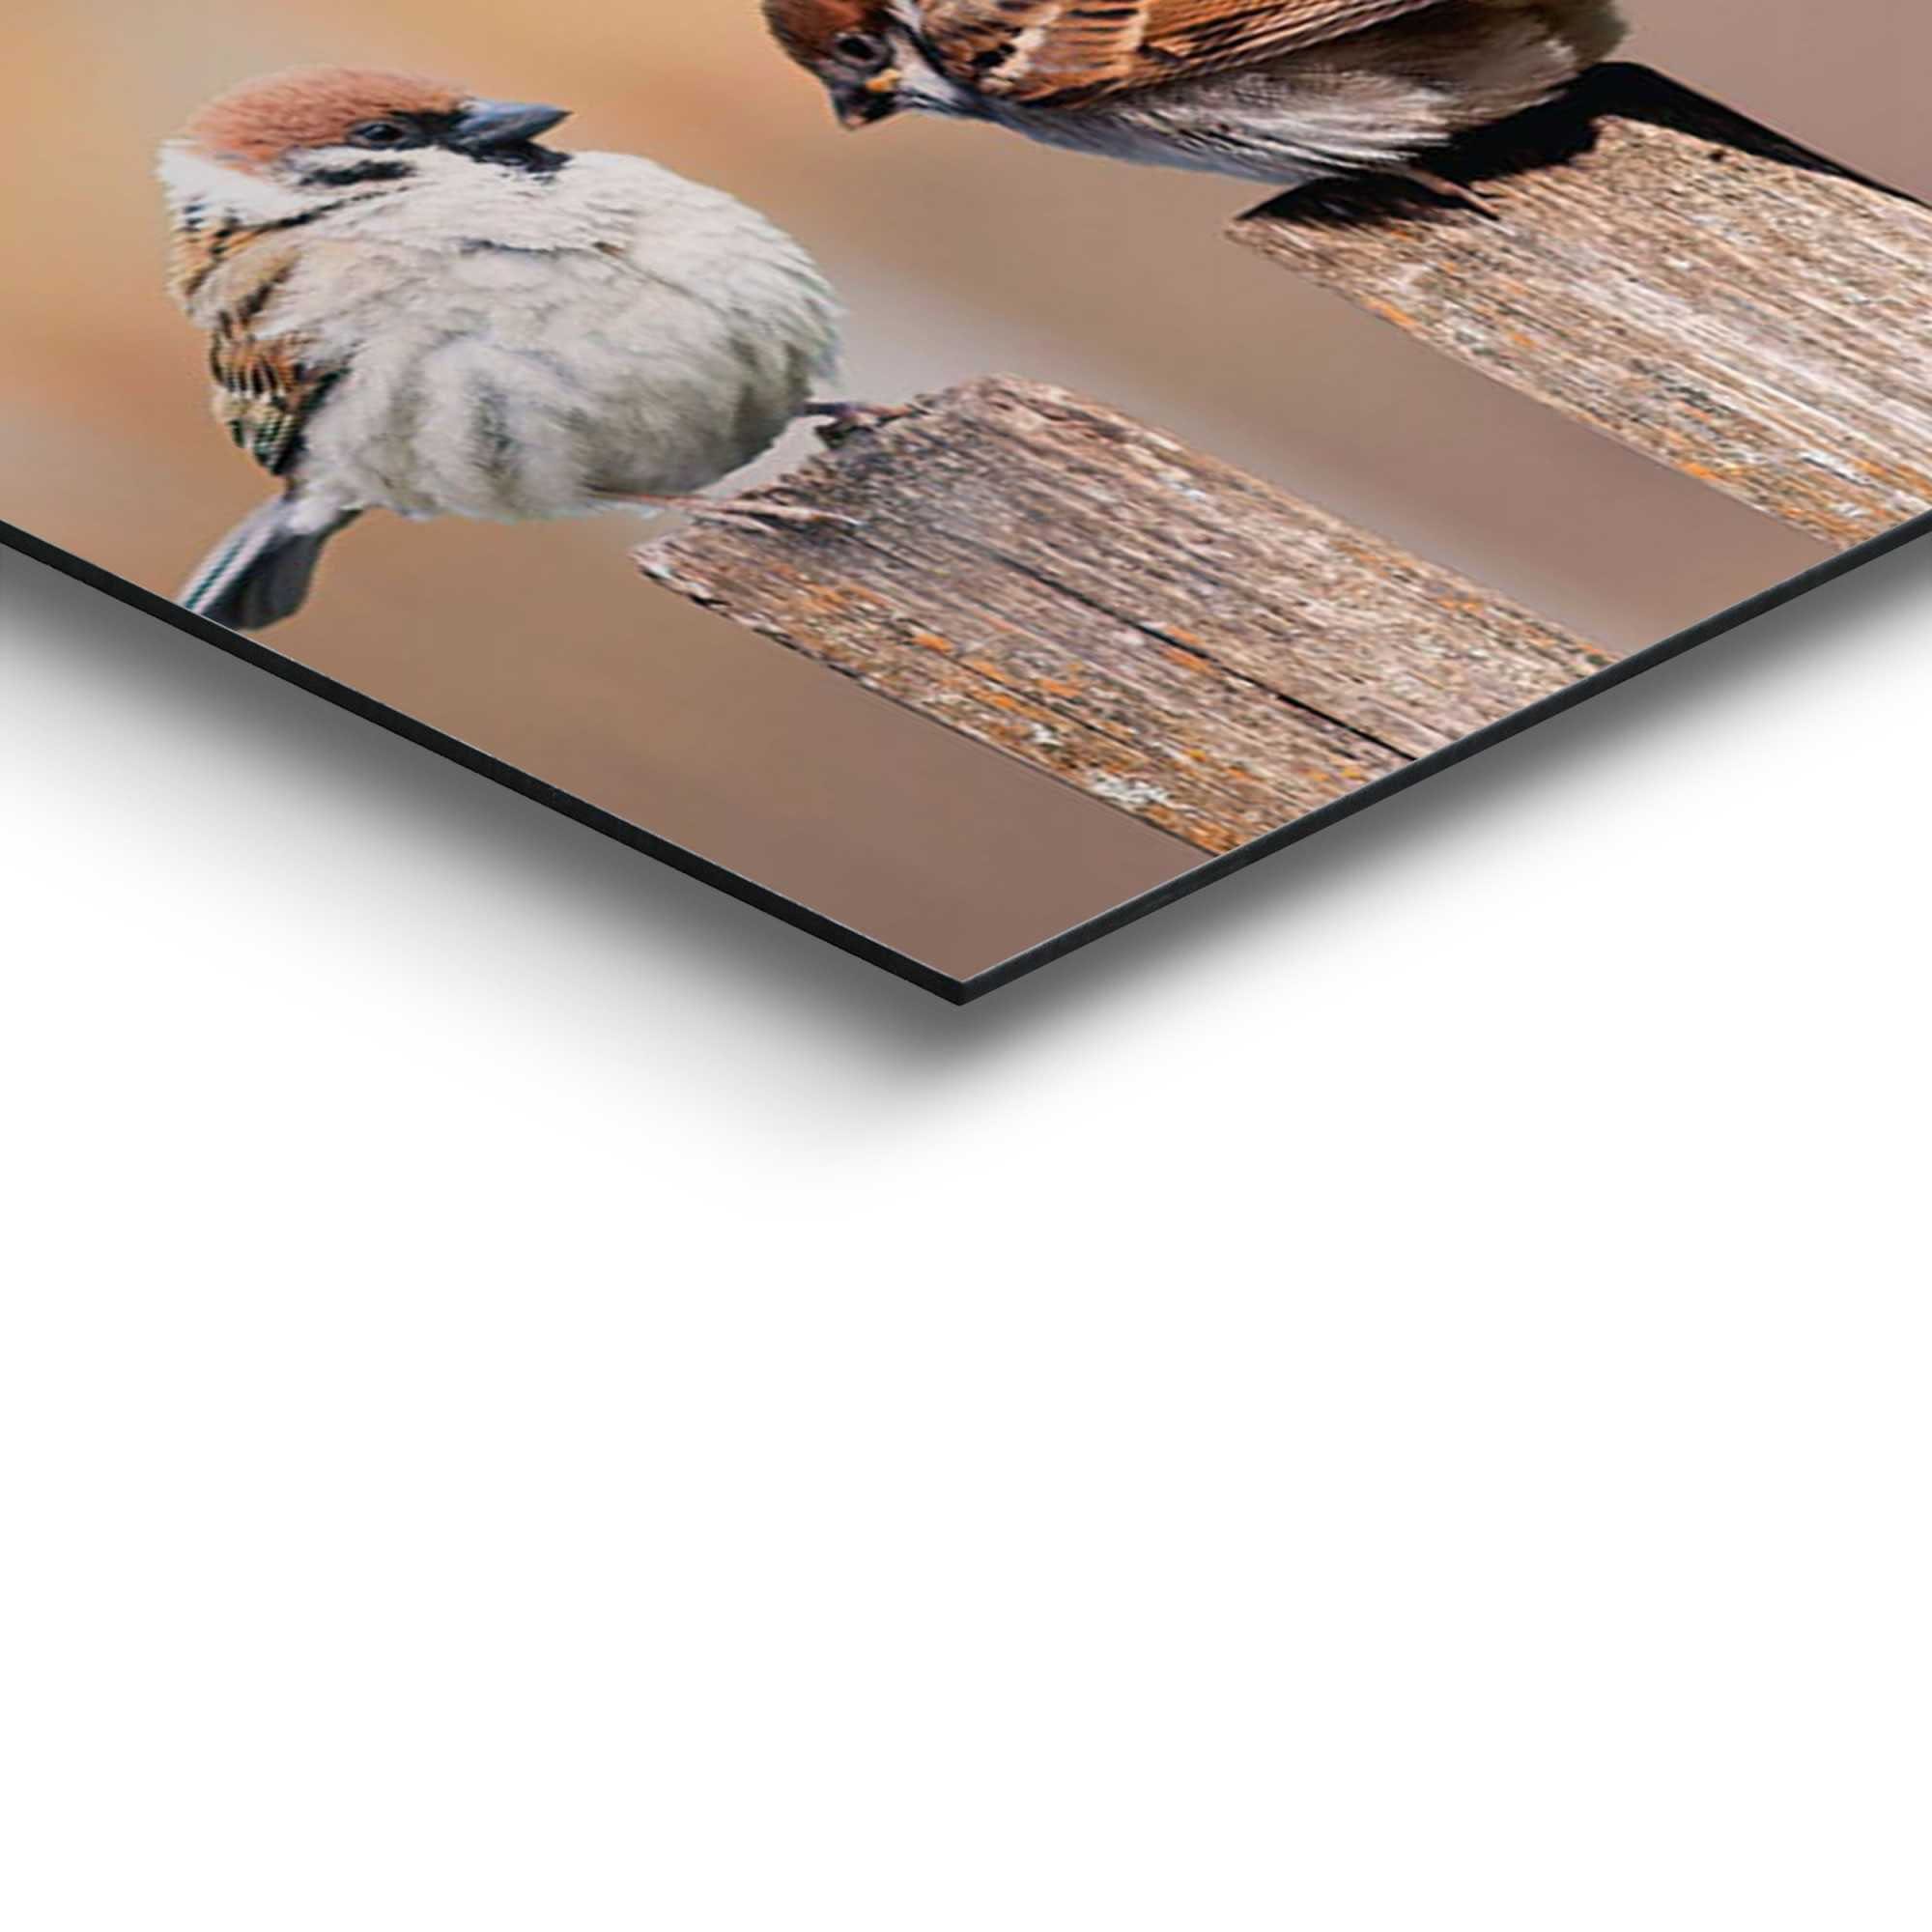 Reinders! 30x90 Panel Bird Family Holzbild Deco